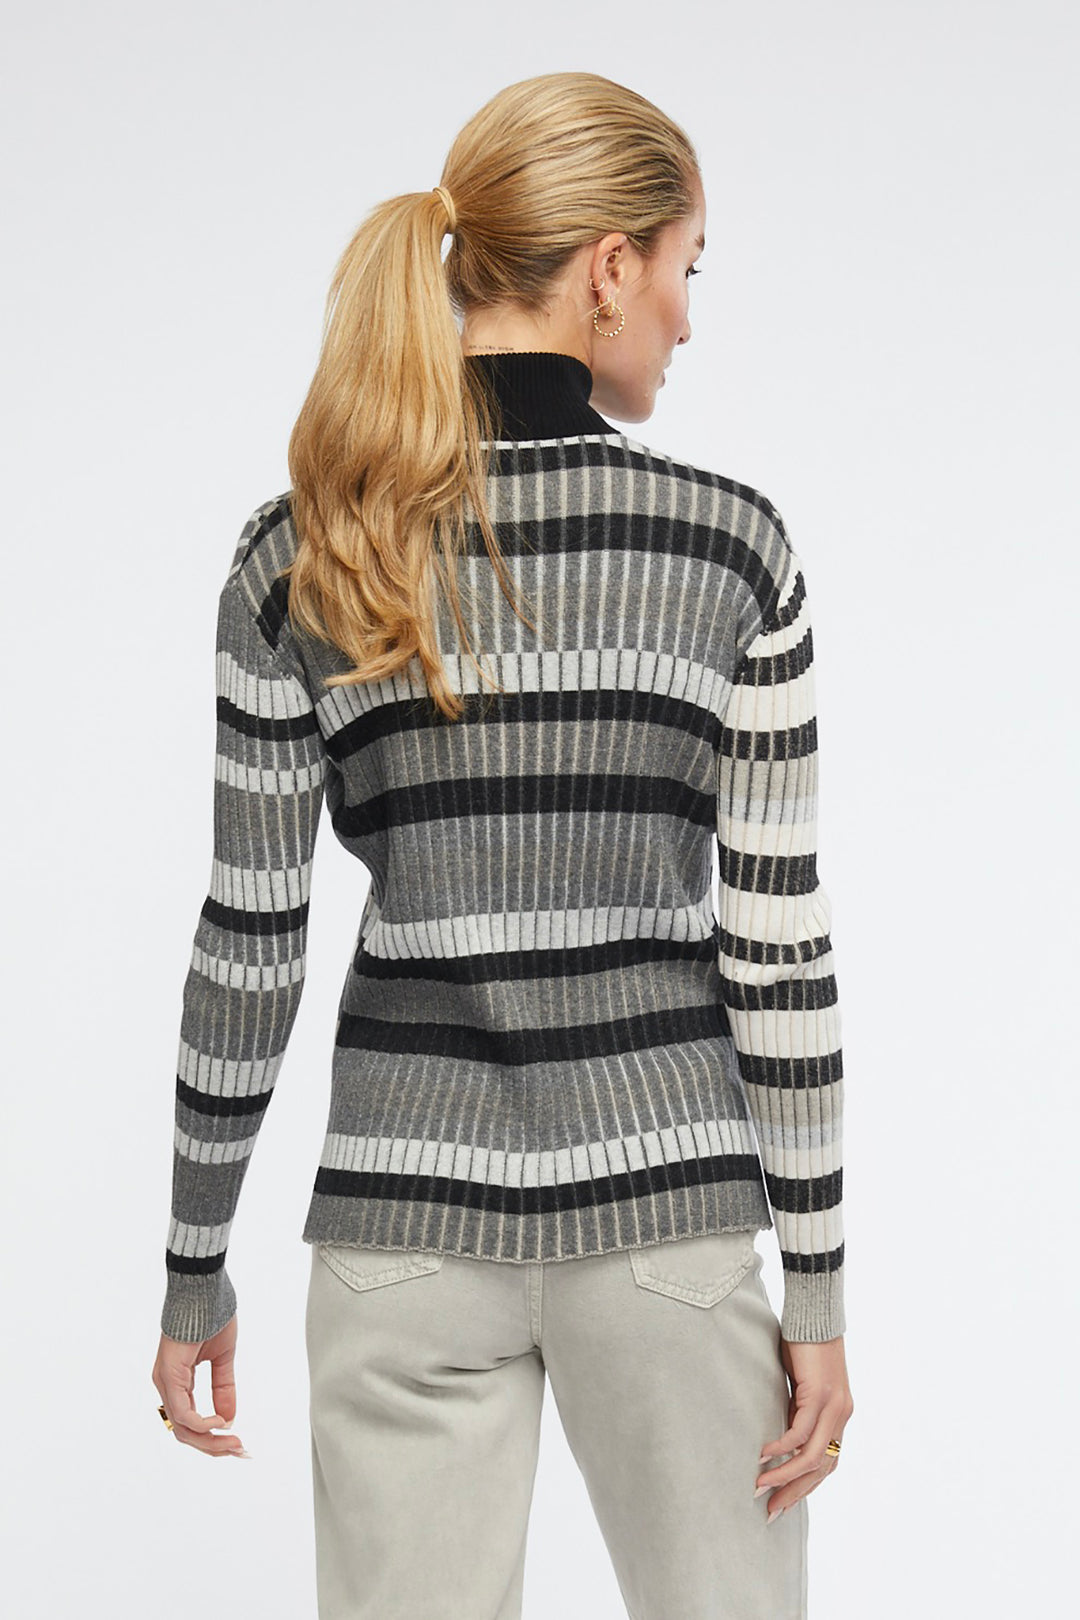 multi stripe front jumper from Zaket & Plover back view